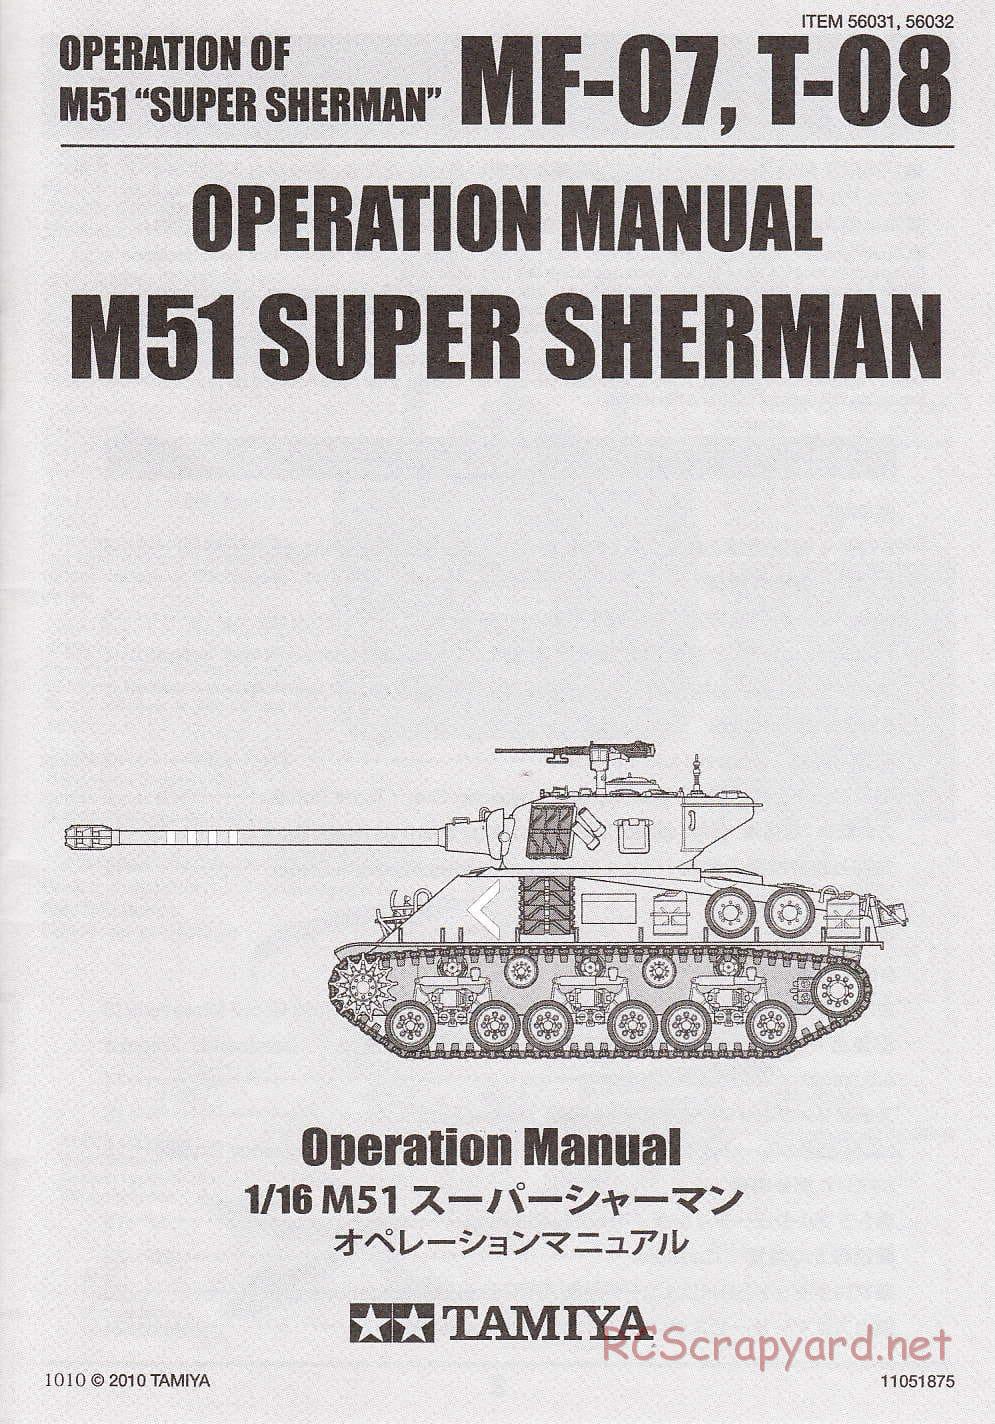 Tamiya - Super Sherman M-51 - 1/16 Scale Chassis - Operation Manual - Page 1